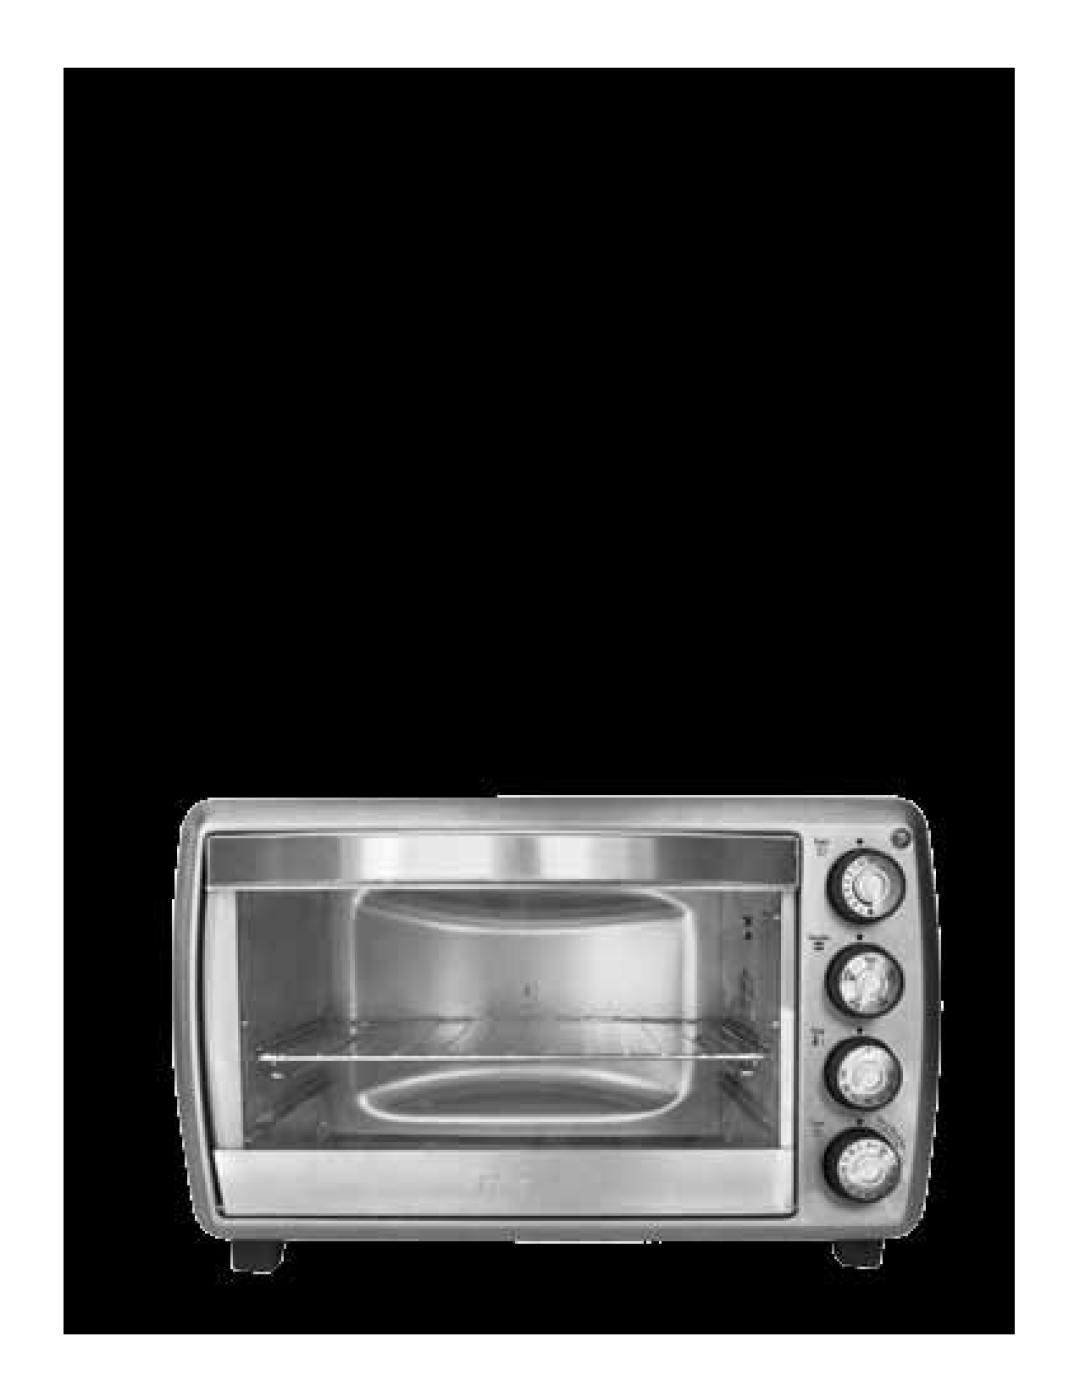 Oster TSSTTVCG01 user manual Countertop Oven, User Manual, Horno para Mostrador, Manual de Instrucctiones, P.N 